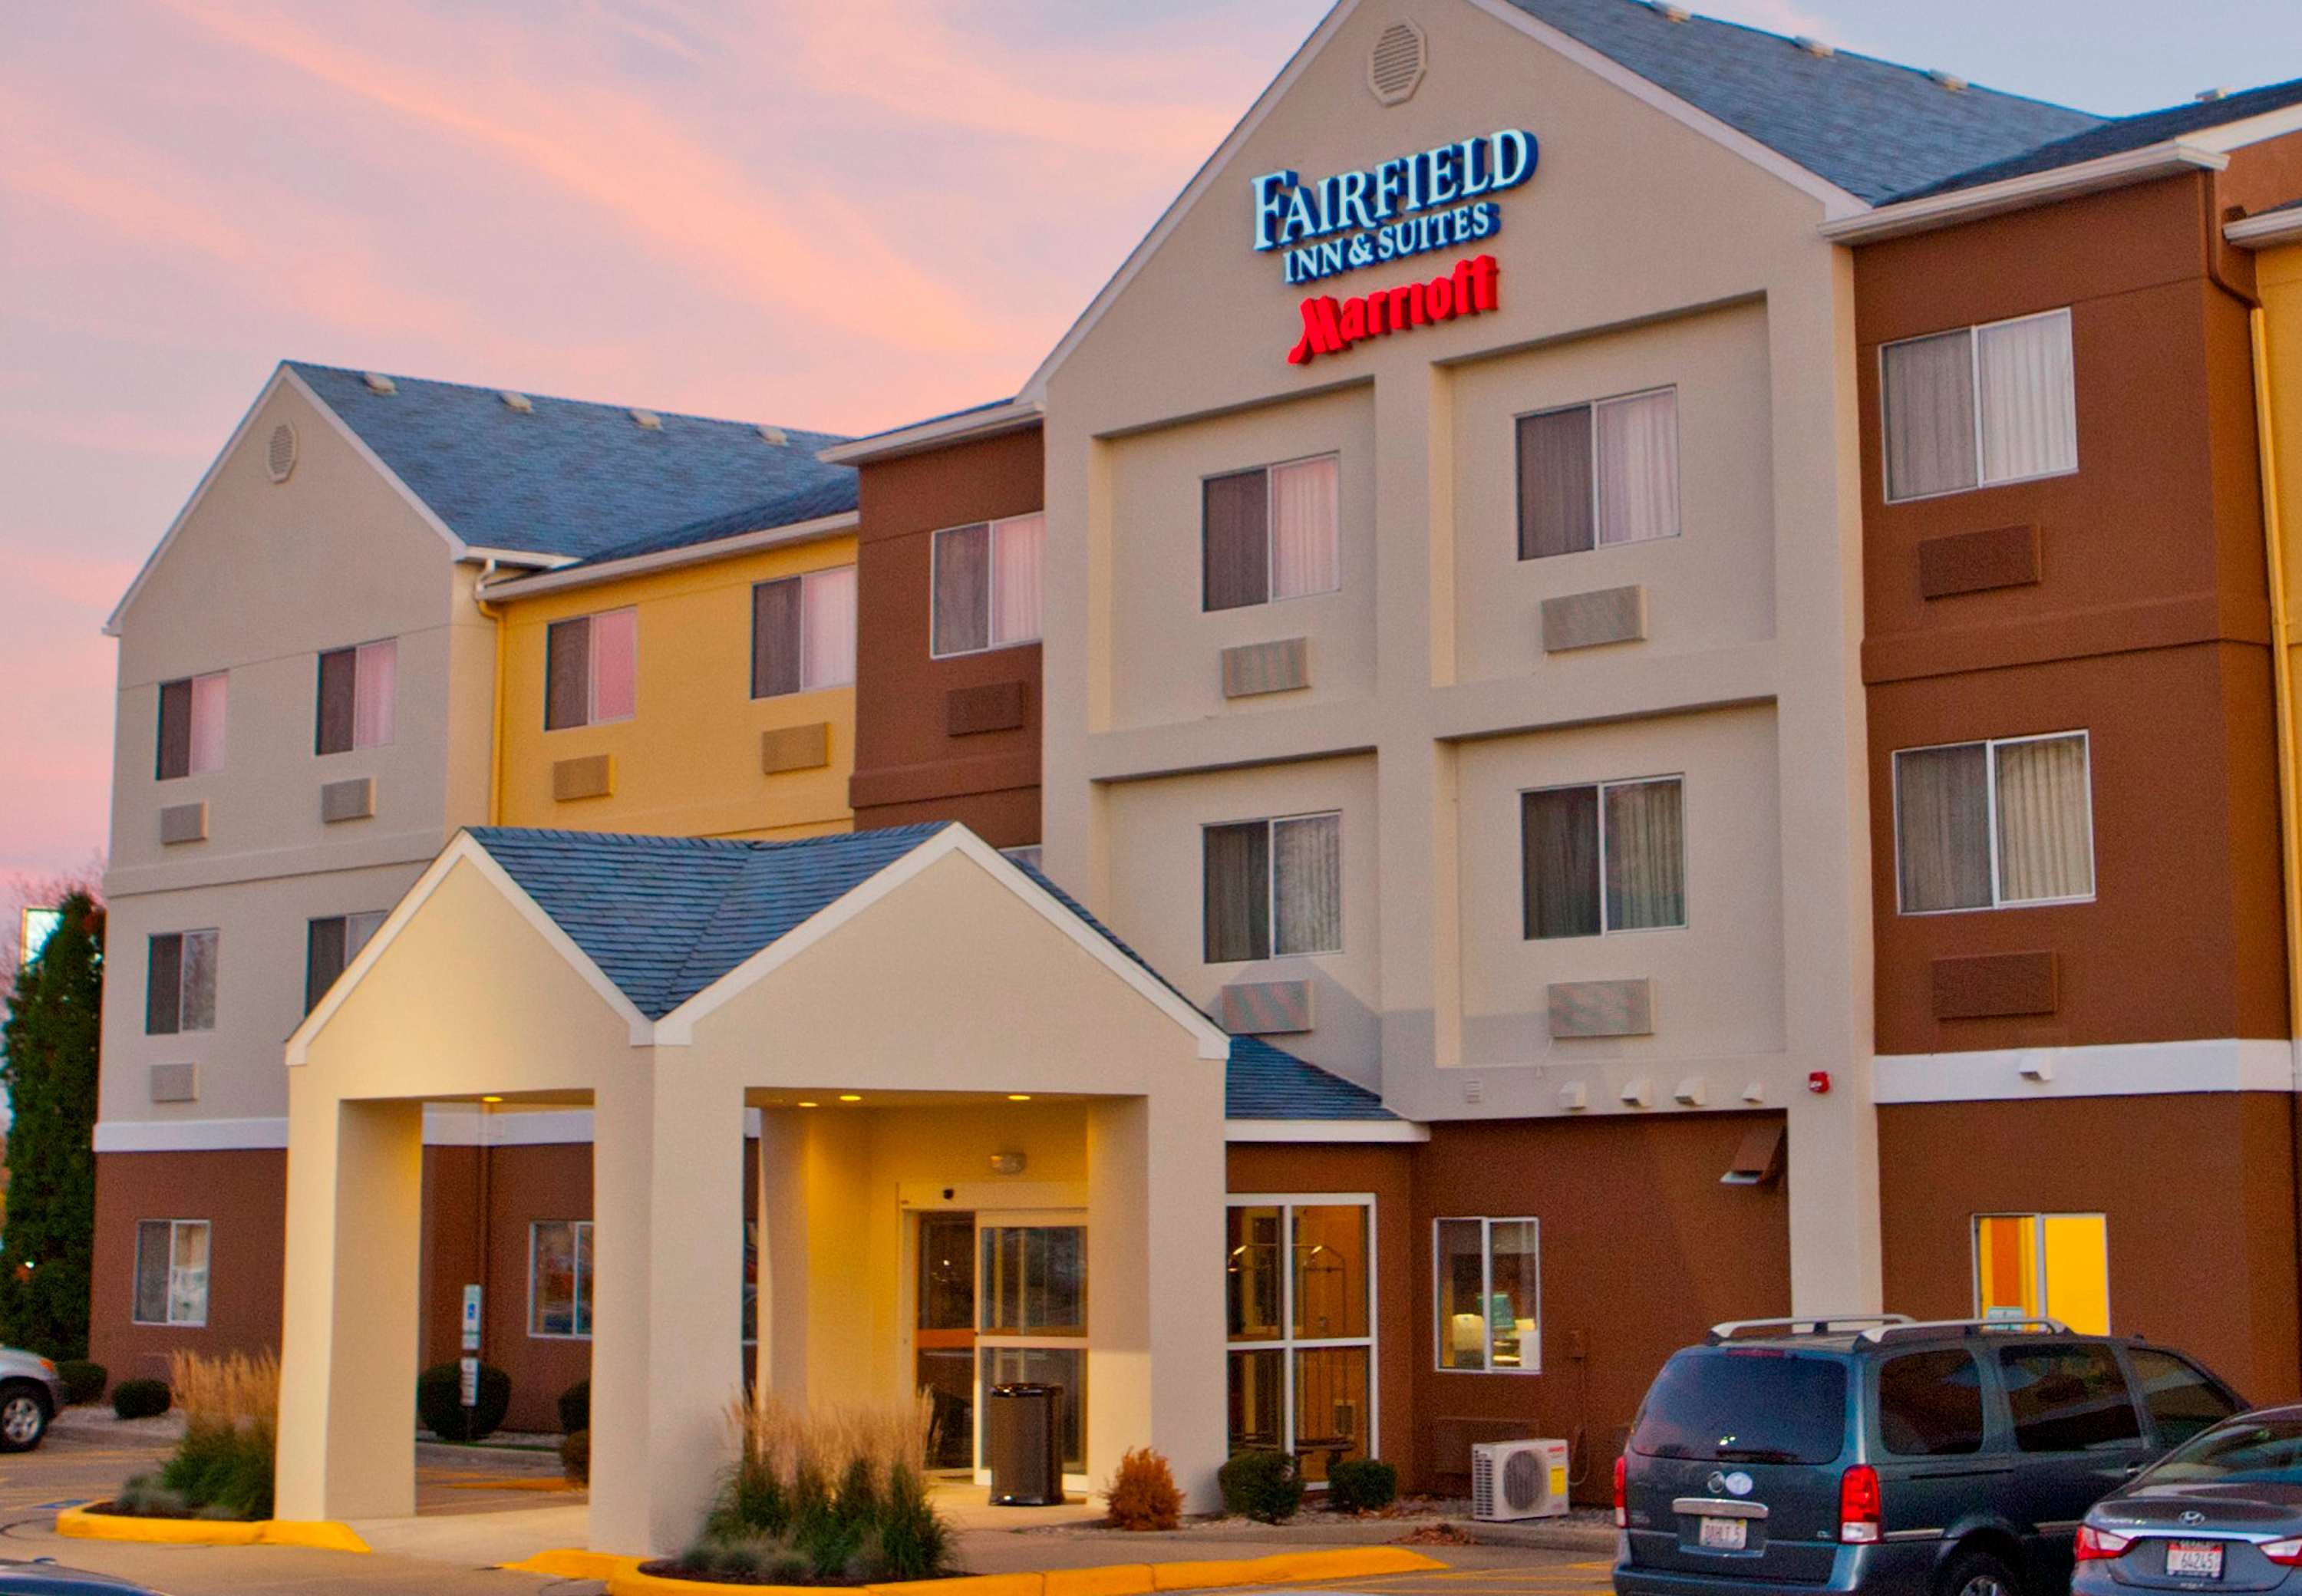 Photo of Fairfield Inn & Suites by Marriott Joliet North/Plainfield, Joliet, IL